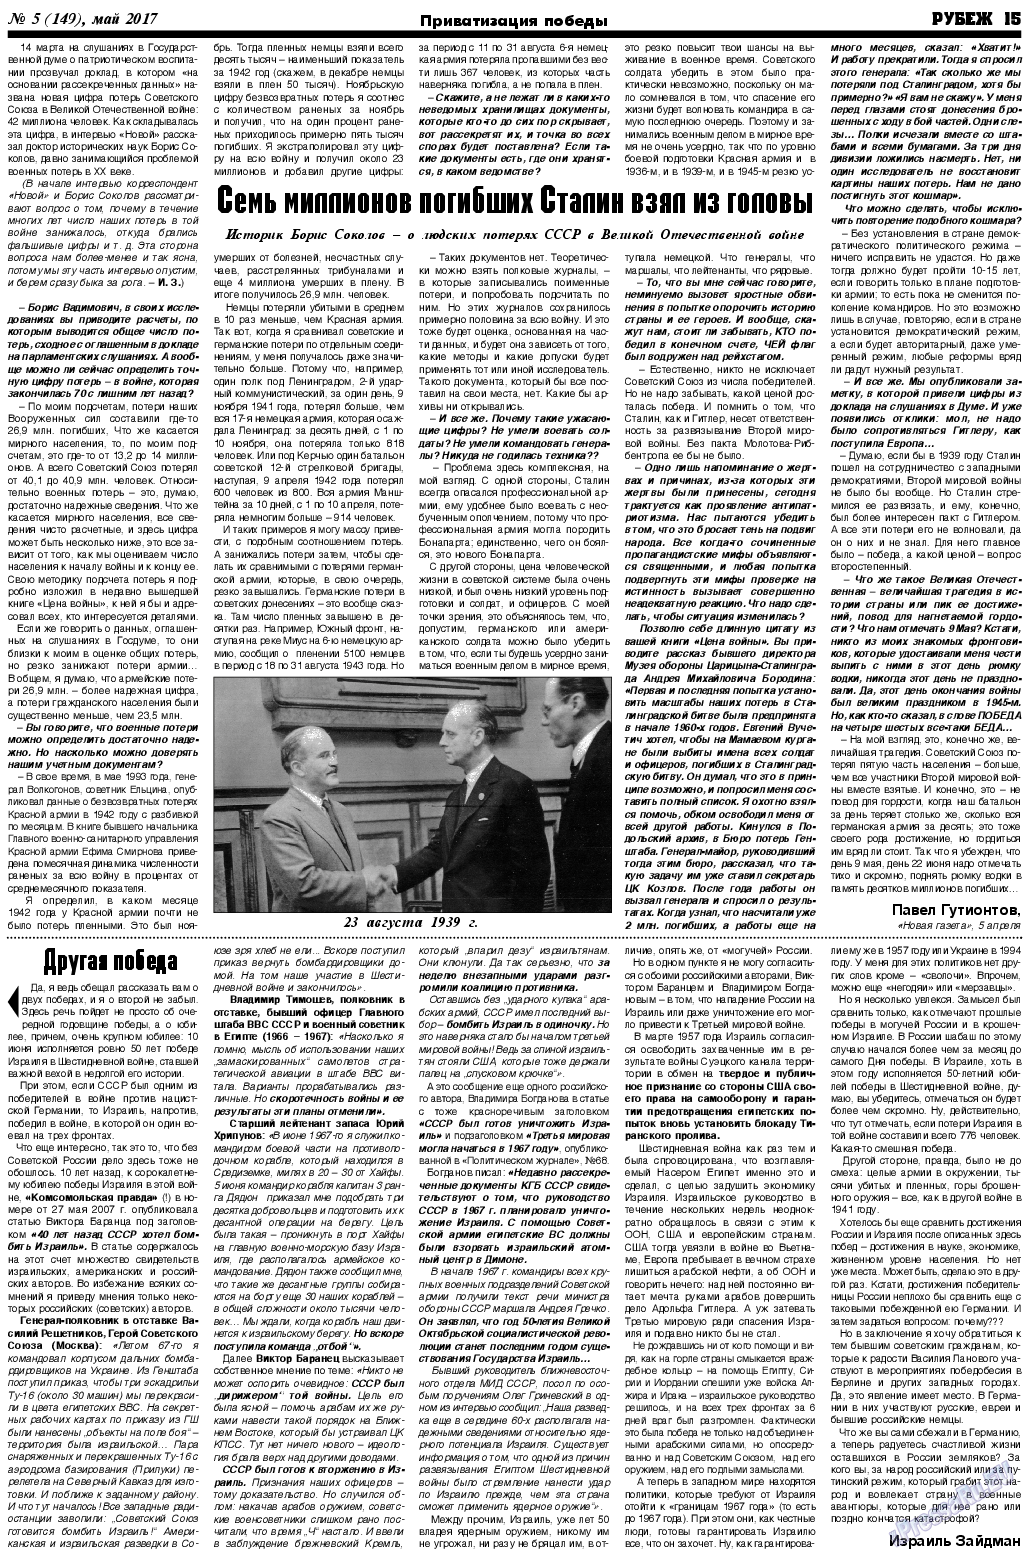 Рубеж, газета. 2017 №5 стр.15